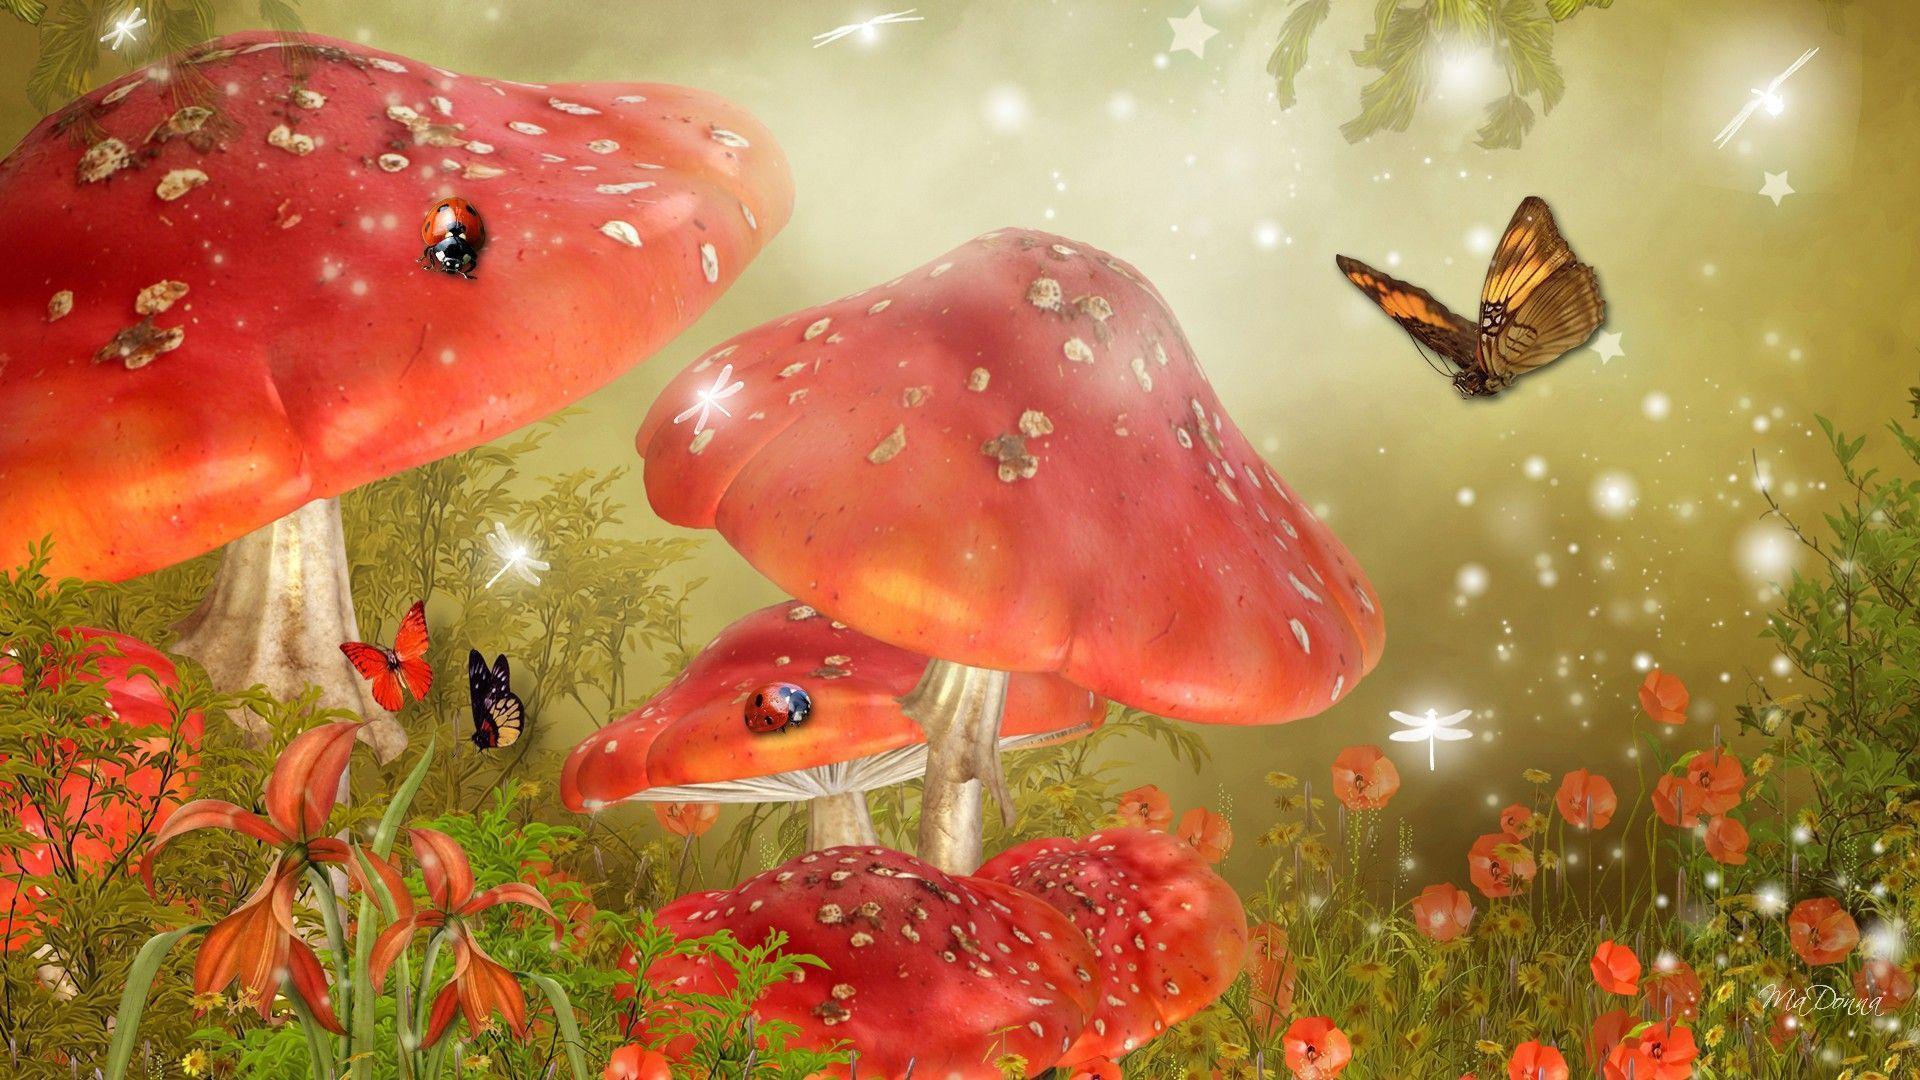 Mystical Background. HD Mystical Mushrooms Wallpaper. Fairies